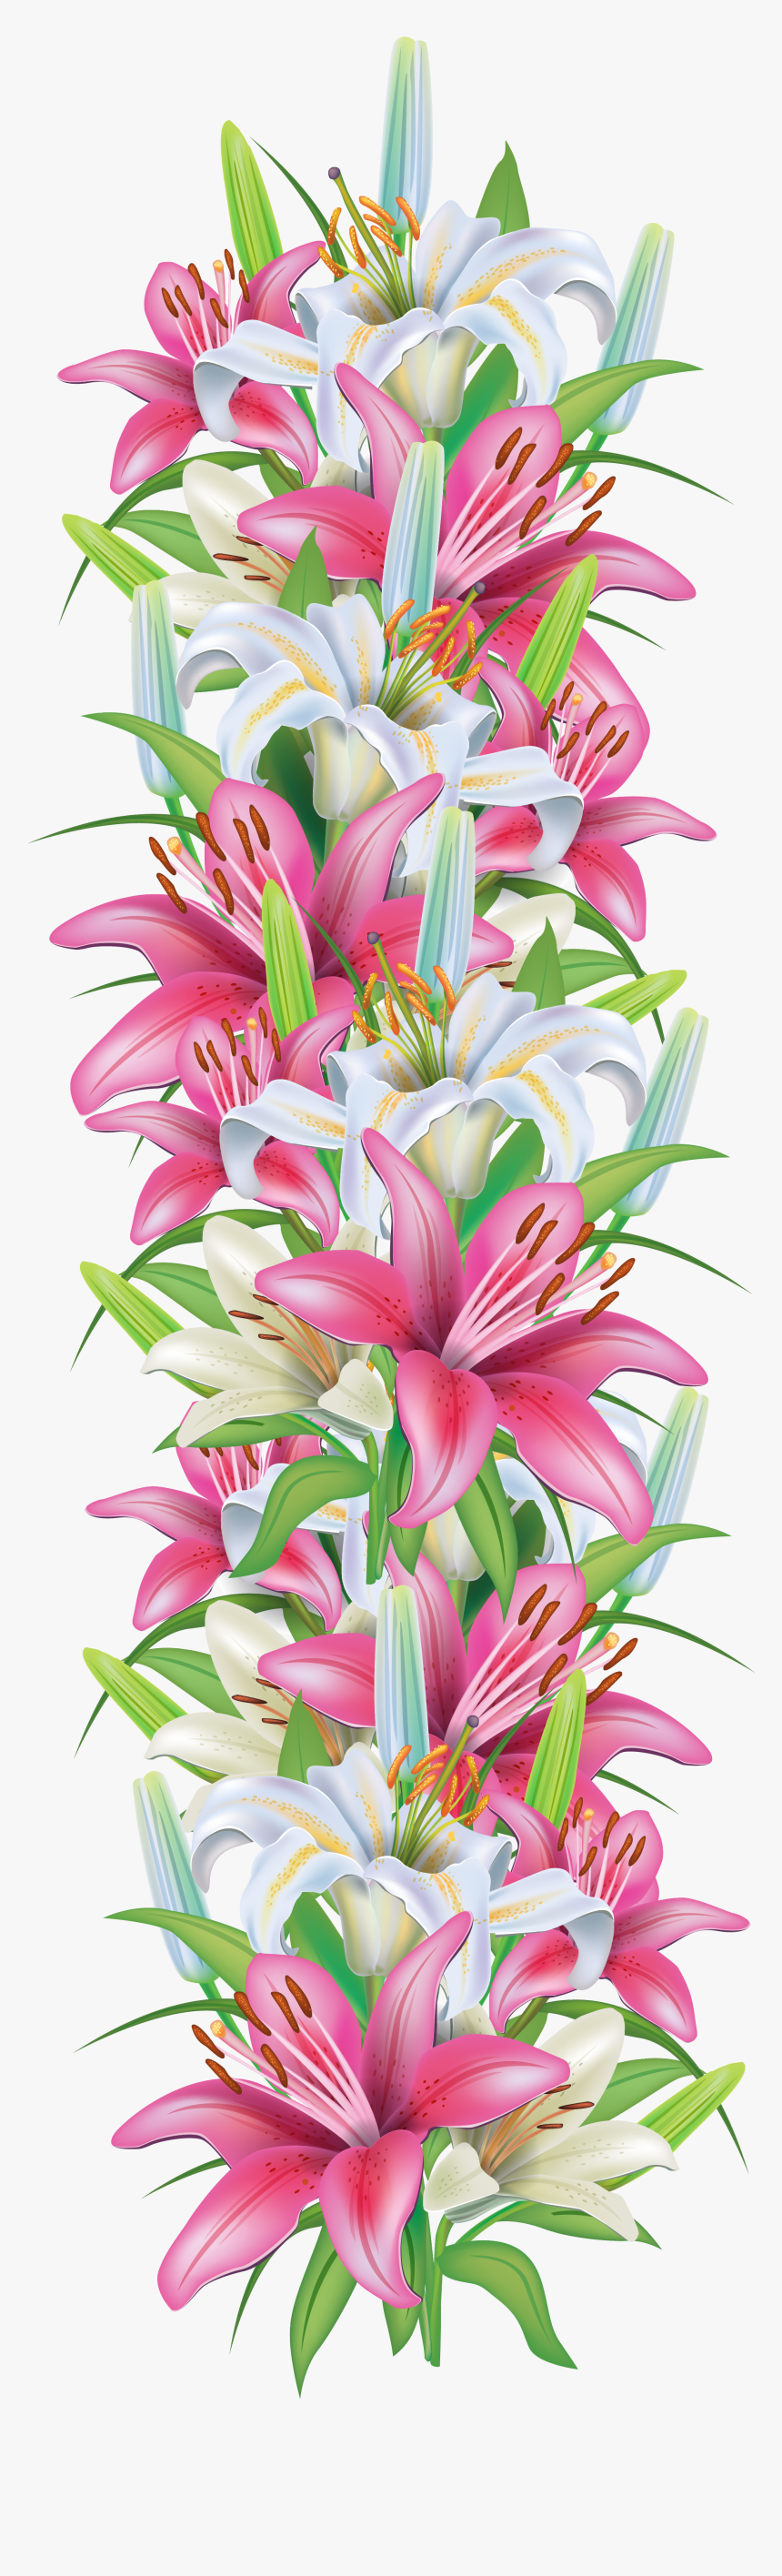 Flower Bouquet Border Png - Floral Decorative Border Png, Transparent Png, Free Download